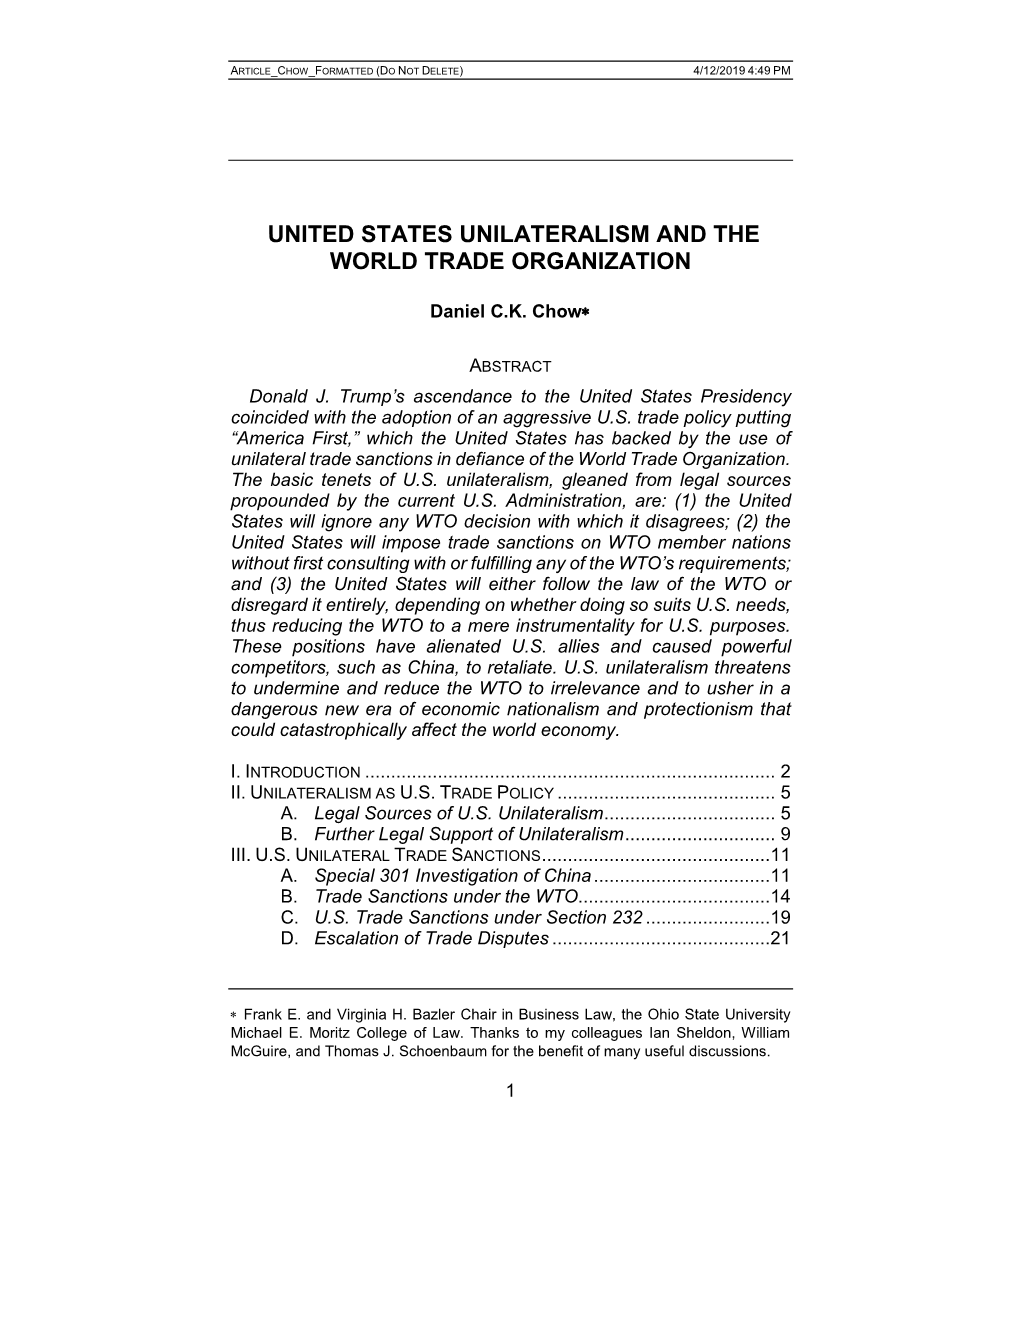 United States Unilateralism and the World Trade Organization